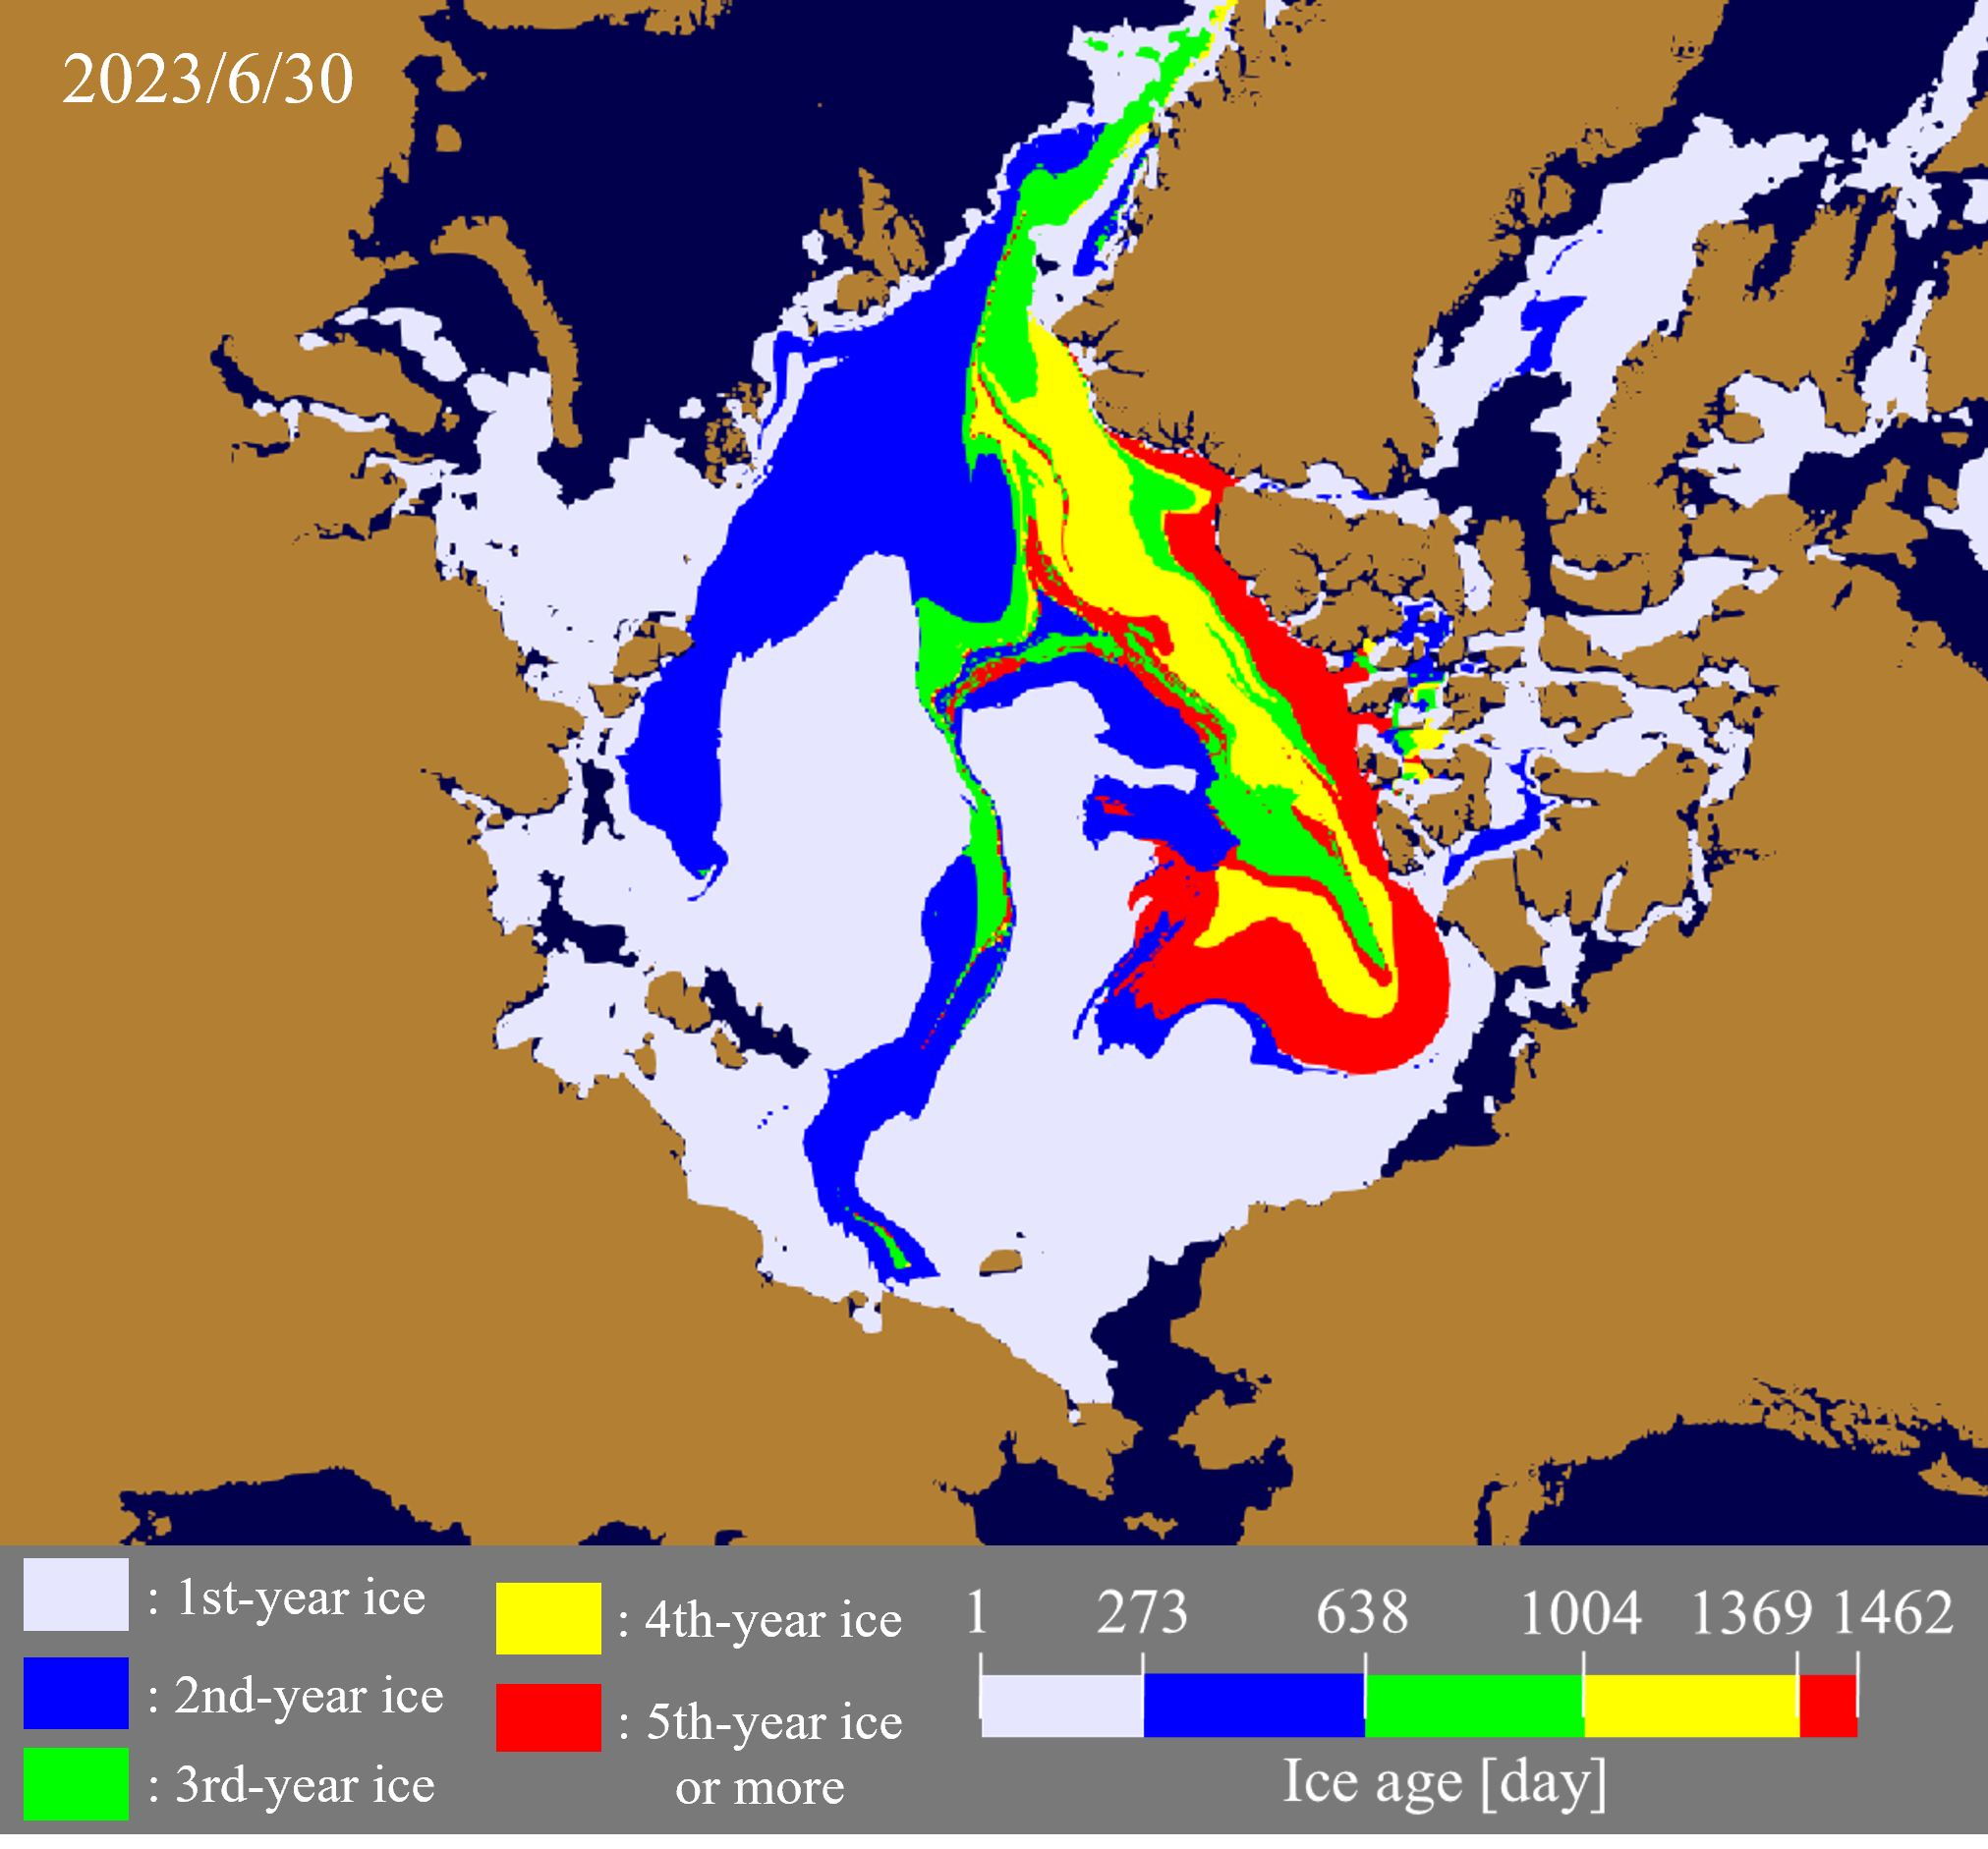 Sea ice age distribution on June 30, 2023